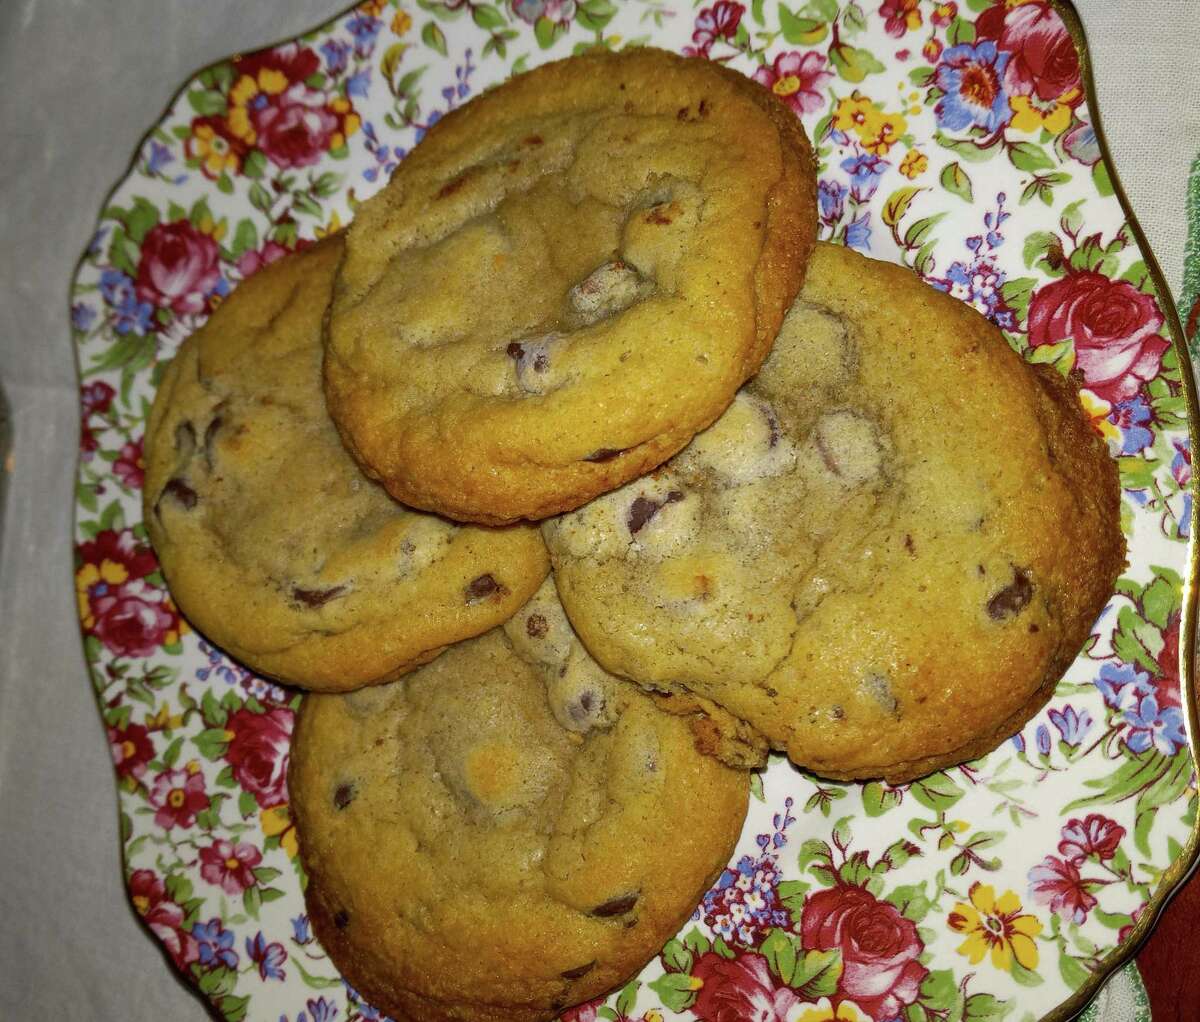 Lori Cheever's chocolate chip cookies.